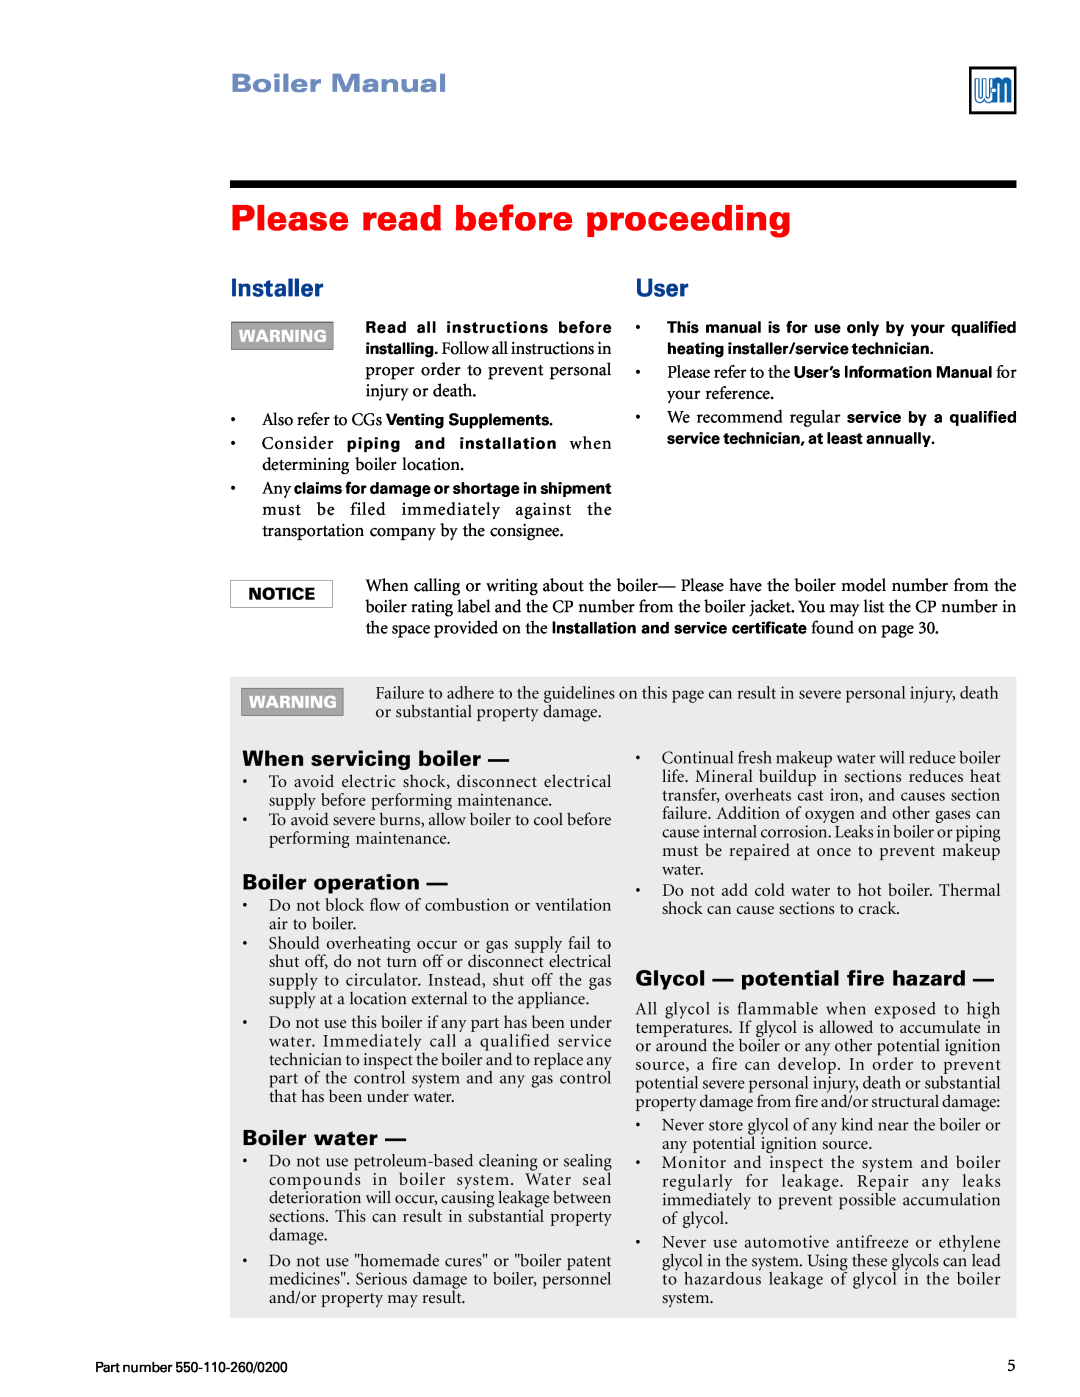 Weil-McLain 550-110-260/02002 manual Please read before proceeding, Boiler Manual, Installer, User 